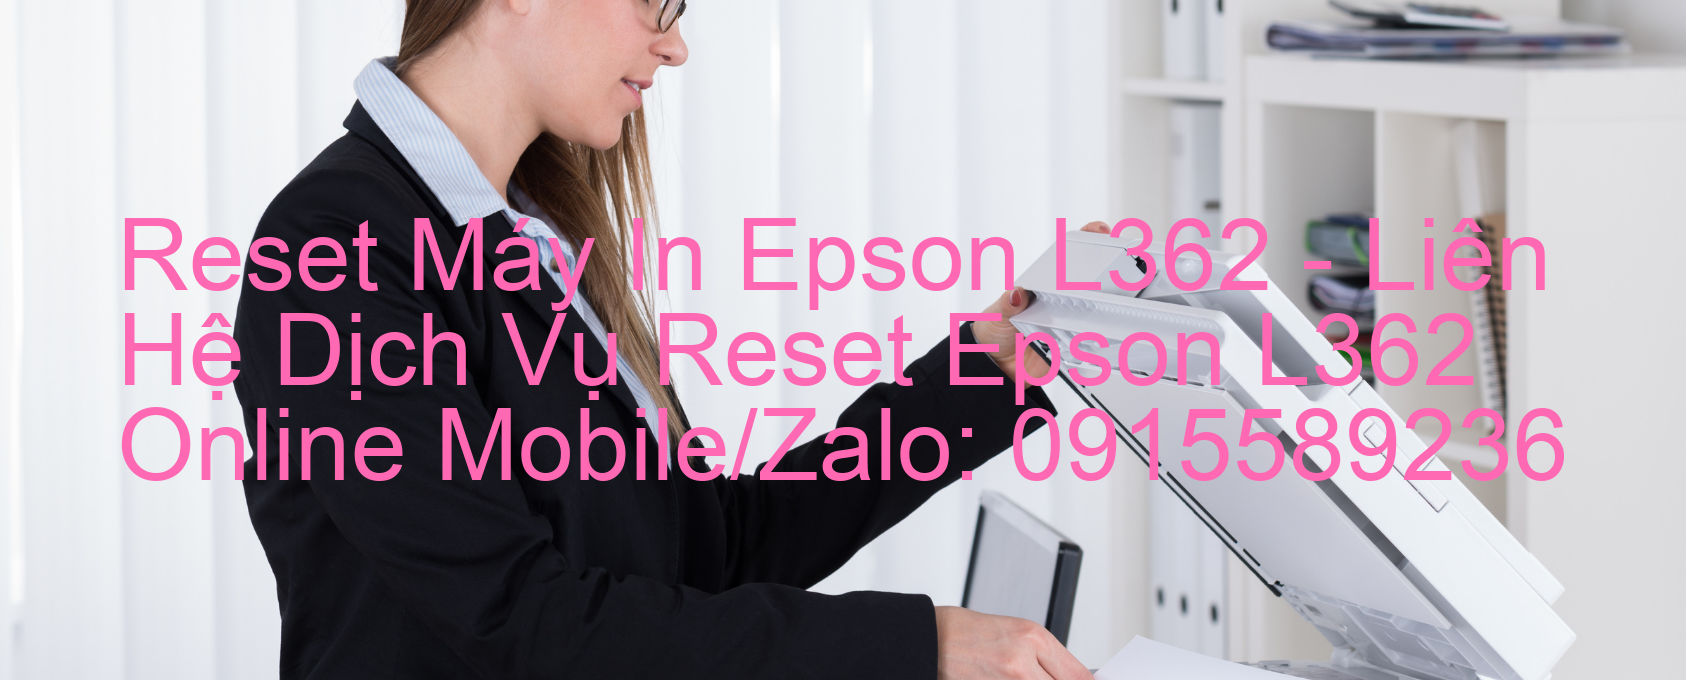 Reset Máy In Epson L362 Online